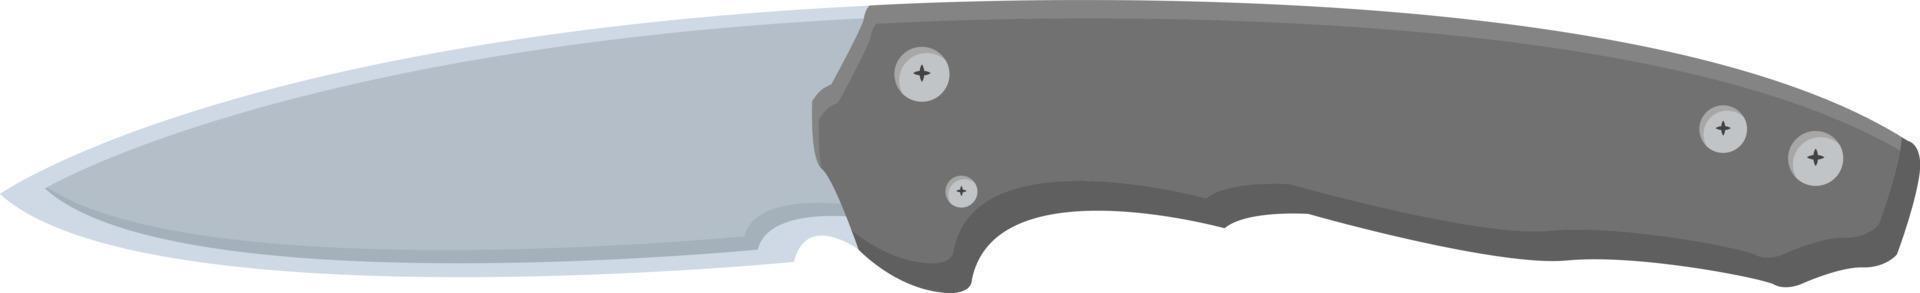 Pocket knife, illustration, vector on white background.